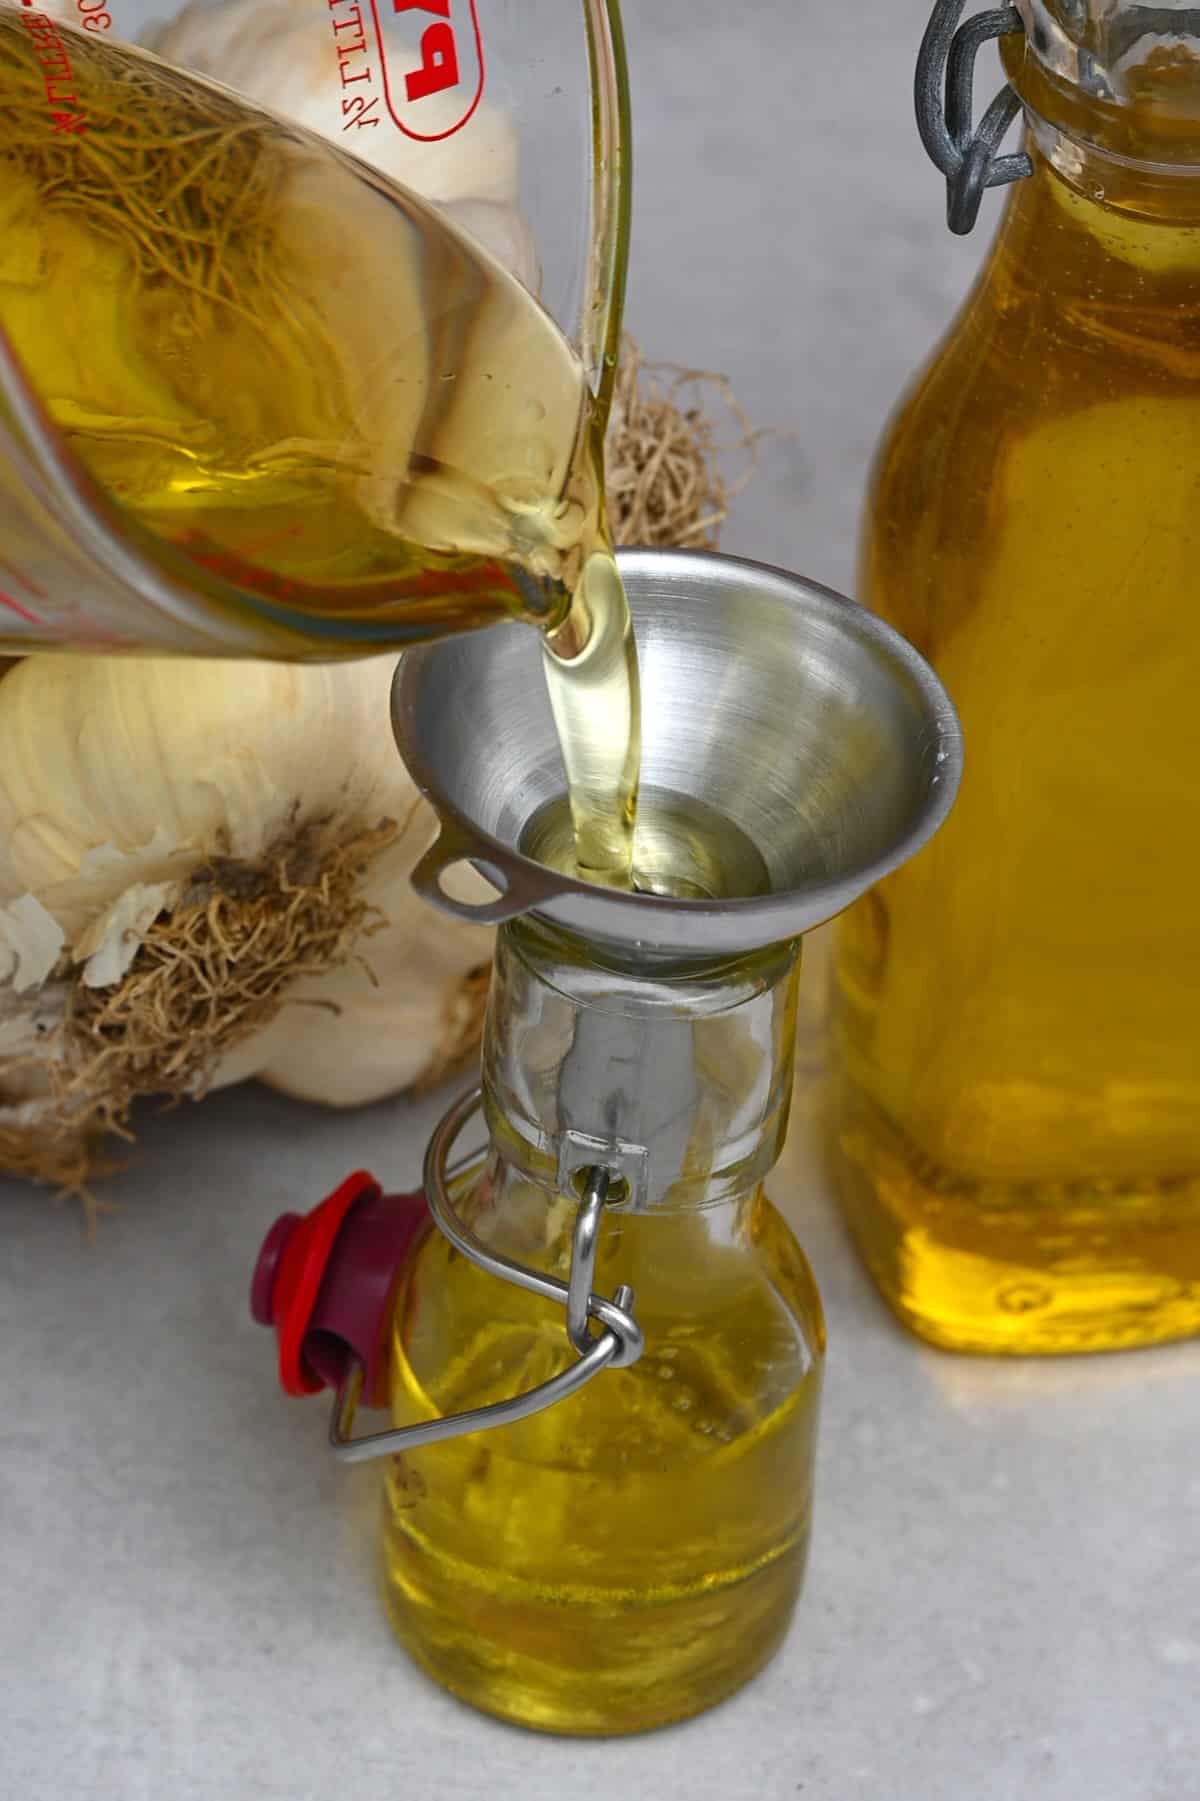 Pournig garlic oil in a small bottle